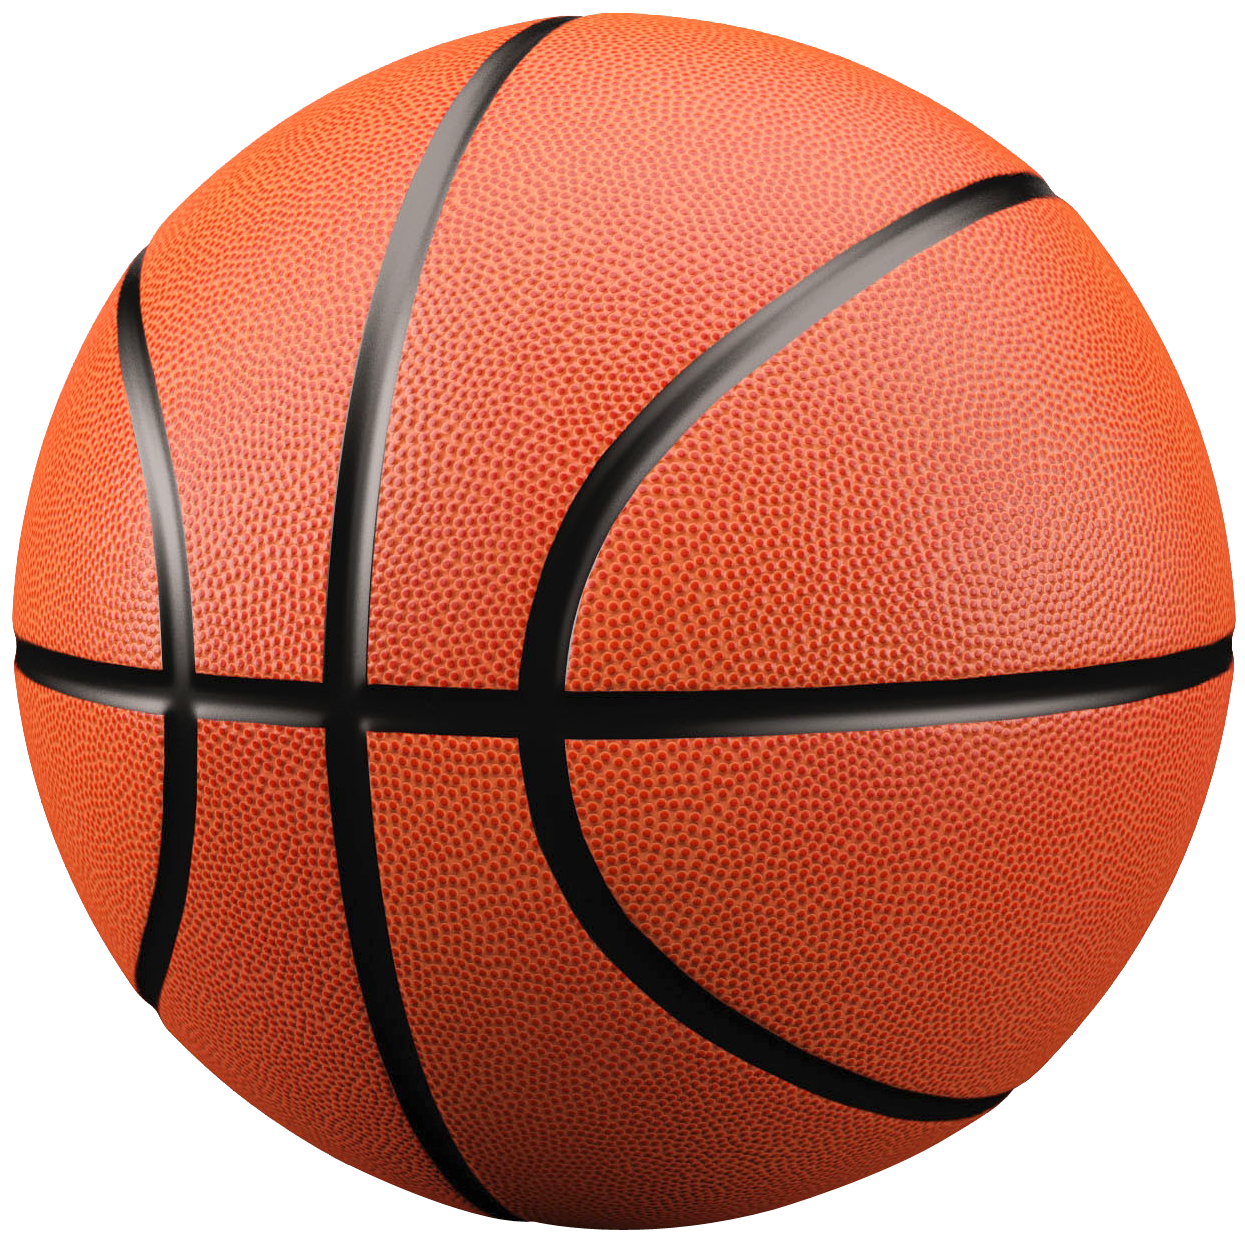 Basketball PNG HD - 121579